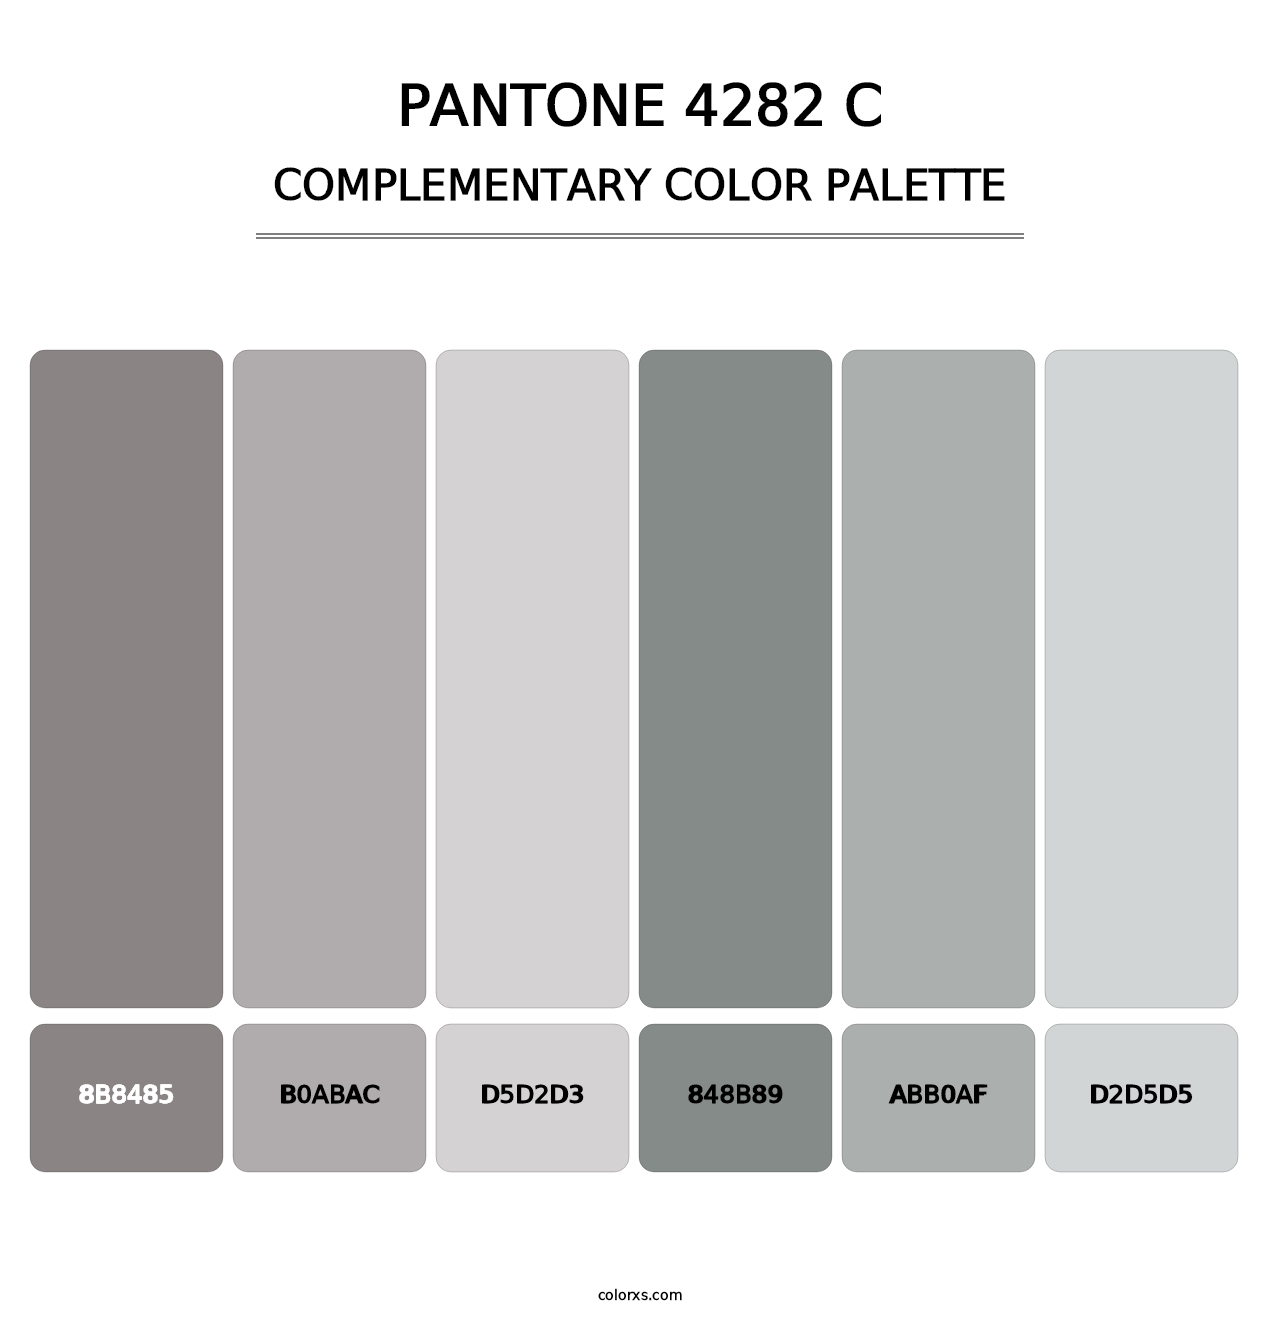 PANTONE 4282 C - Complementary Color Palette